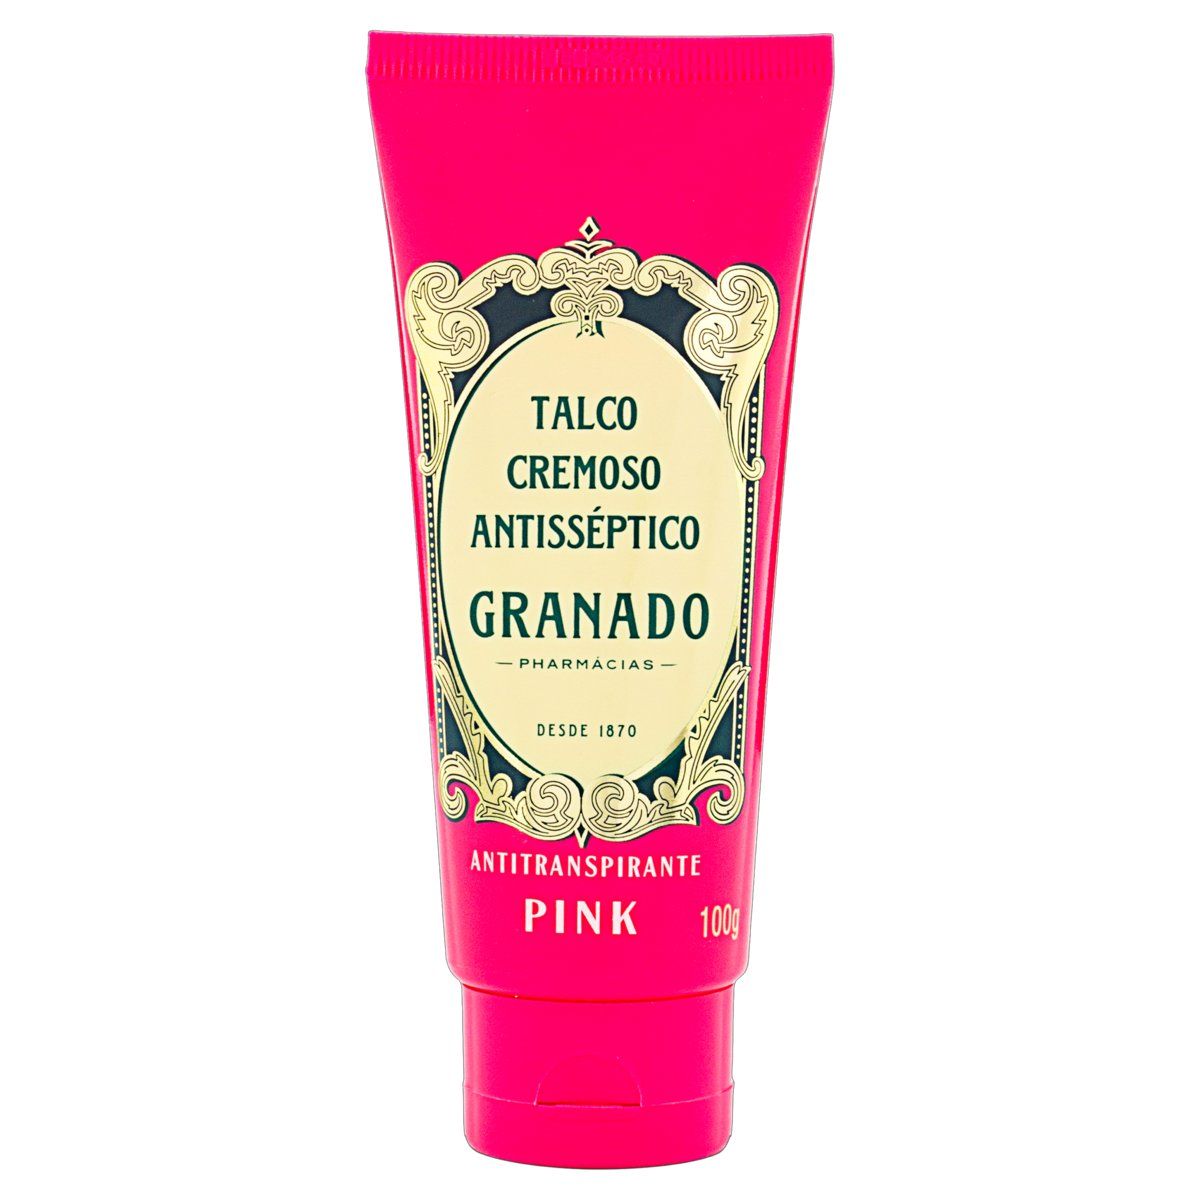 Talco Cremoso Antisséptico Granado Pink Bisnaga 100g image number 0